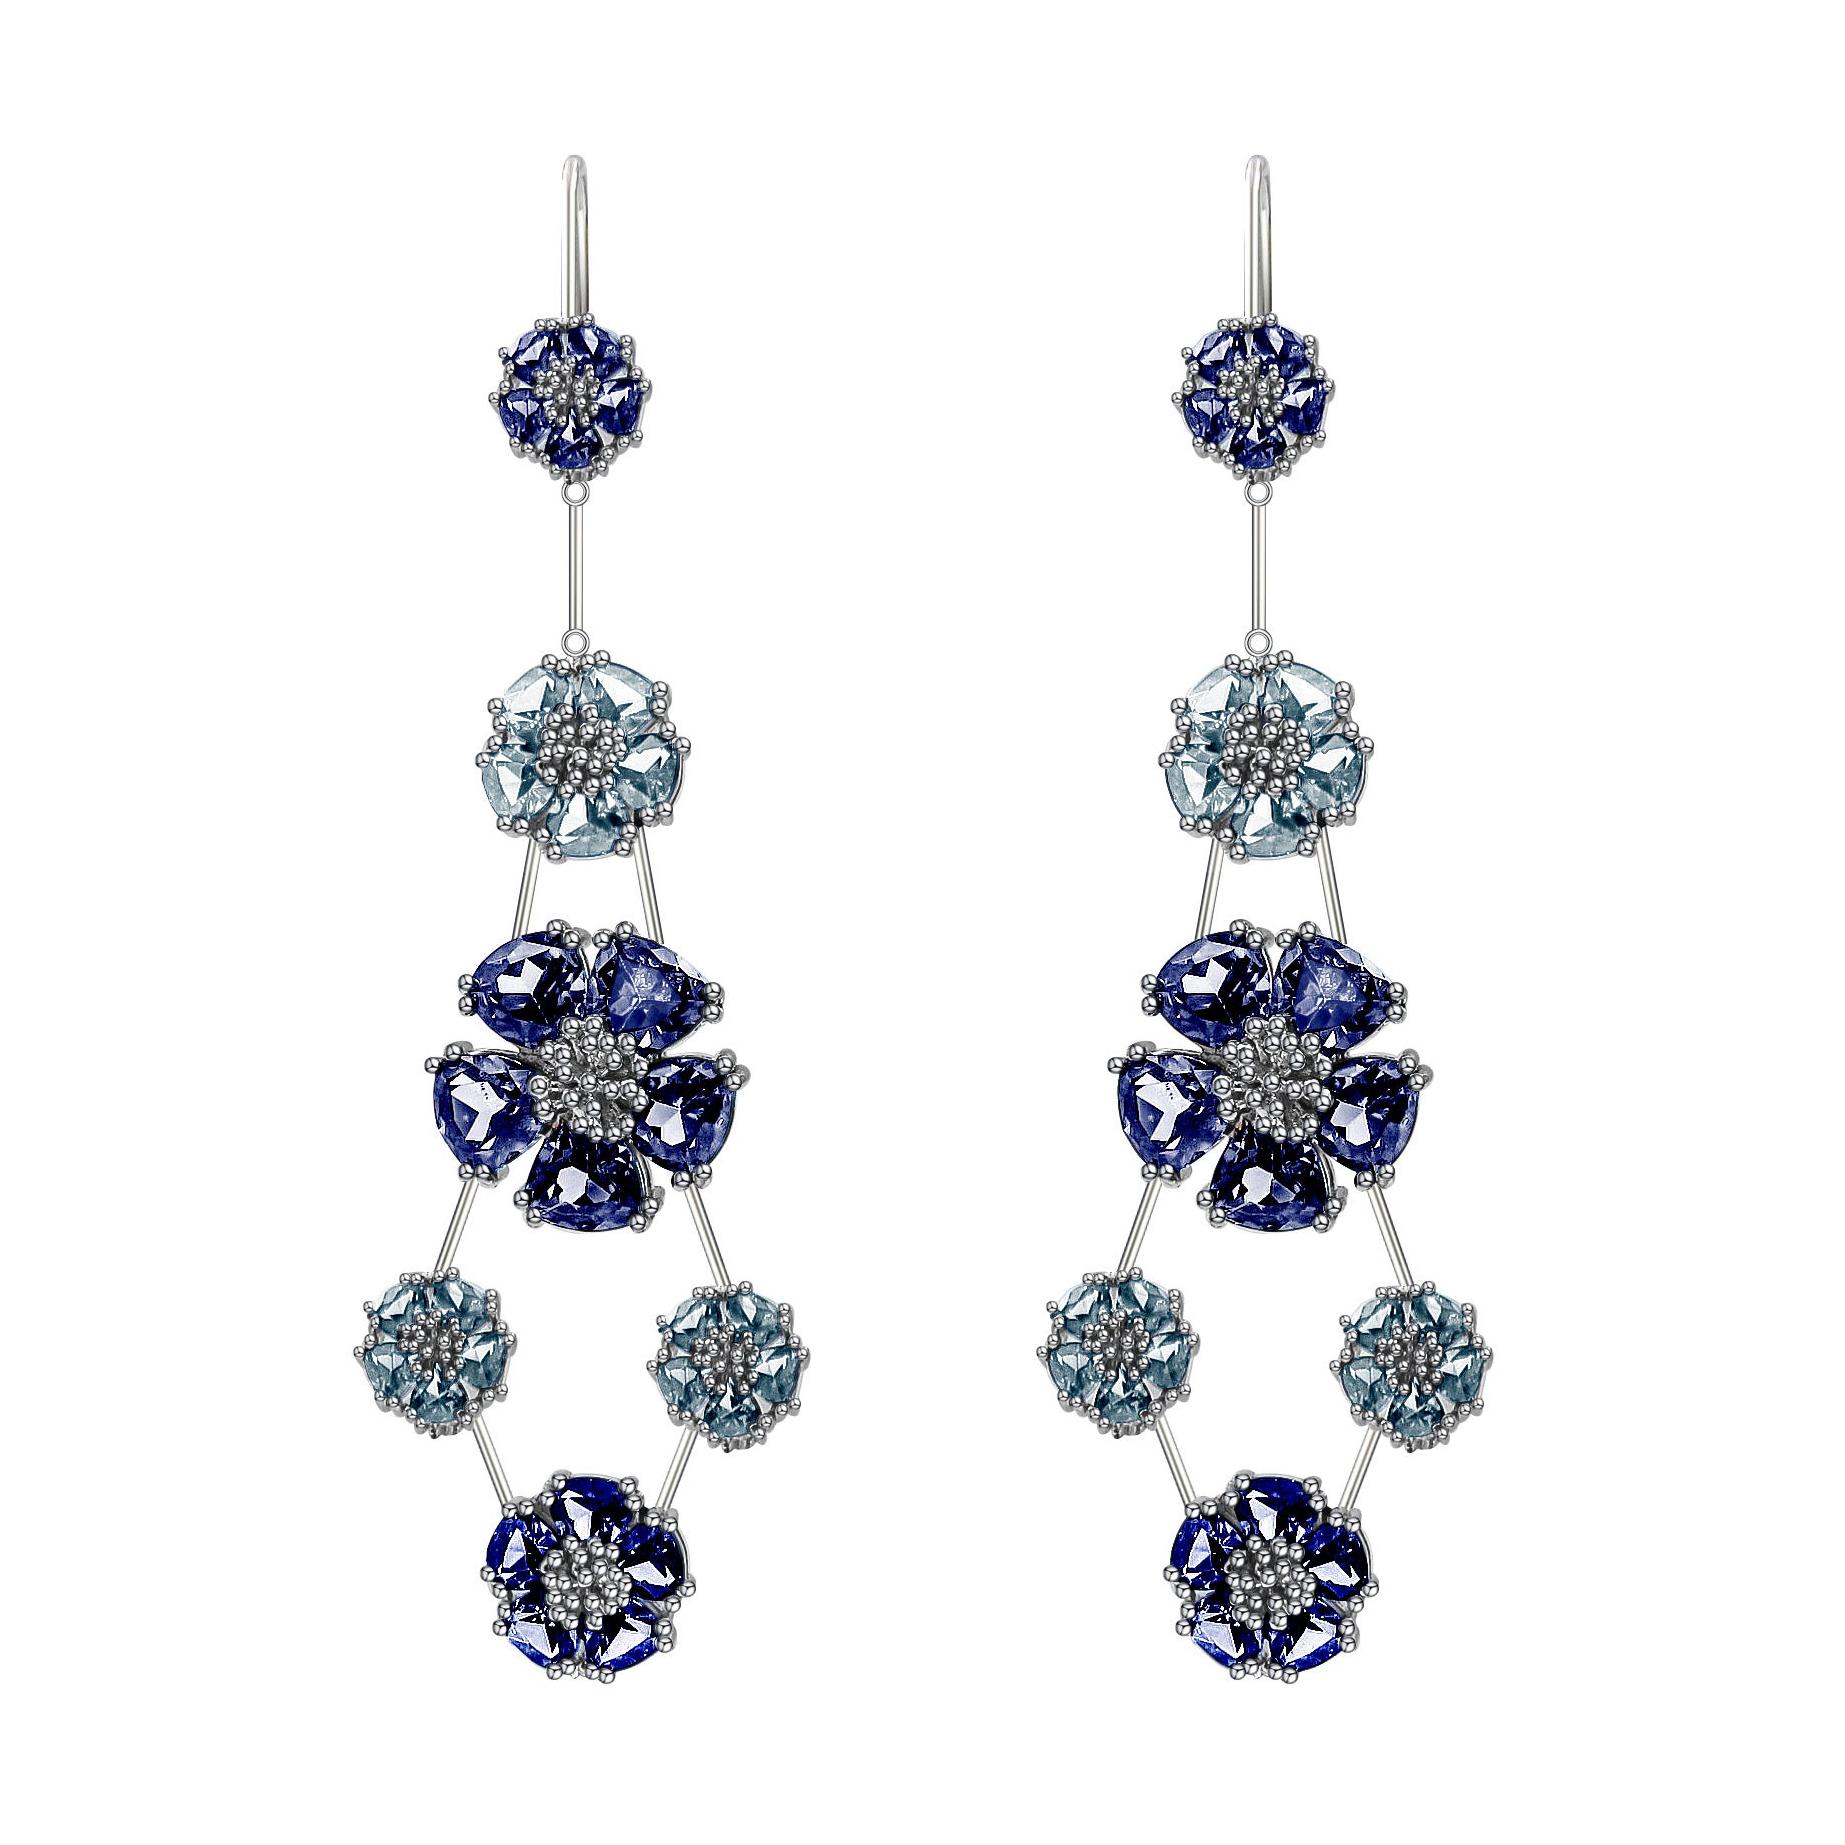 Dark Blue Topaz & Light Blue Topaz Blossom Double-Tier Chandelier Earrings